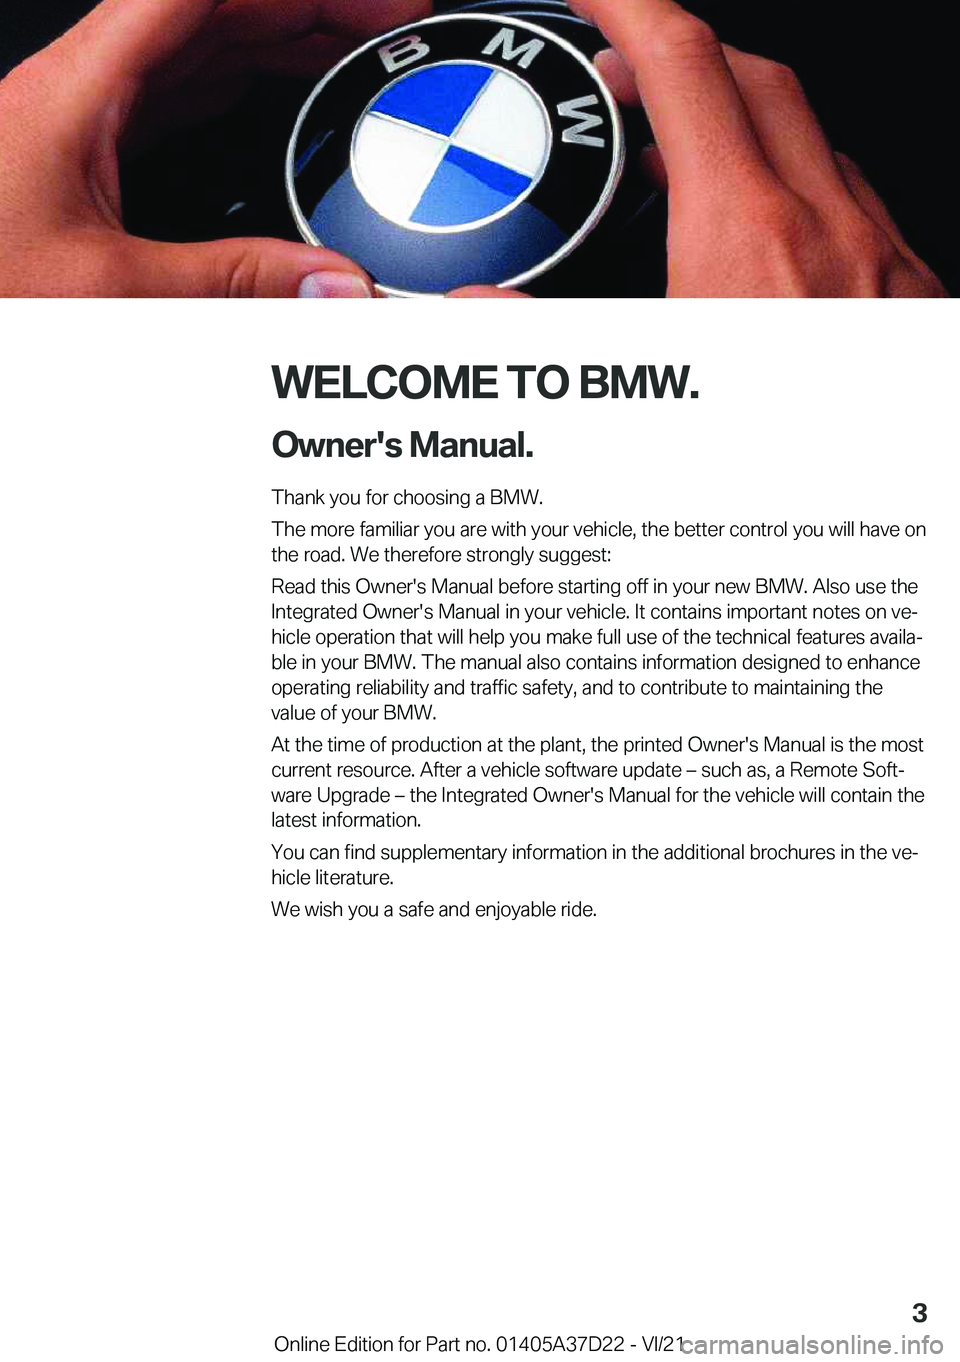 BMW X5 2022  Owners Manual �W�E�L�C�O�M�E��T�O��B�M�W�.�O�w�n�e�r�'�s��M�a�n�u�a�l�.
�T�h�a�n�k��y�o�u��f�o�r��c�h�o�o�s�i�n�g��a��B�M�W�.
�T�h�e��m�o�r�e��f�a�m�i�l�i�a�r��y�o�u��a�r�e��w�i�t�h��y�o�u�r��v�e